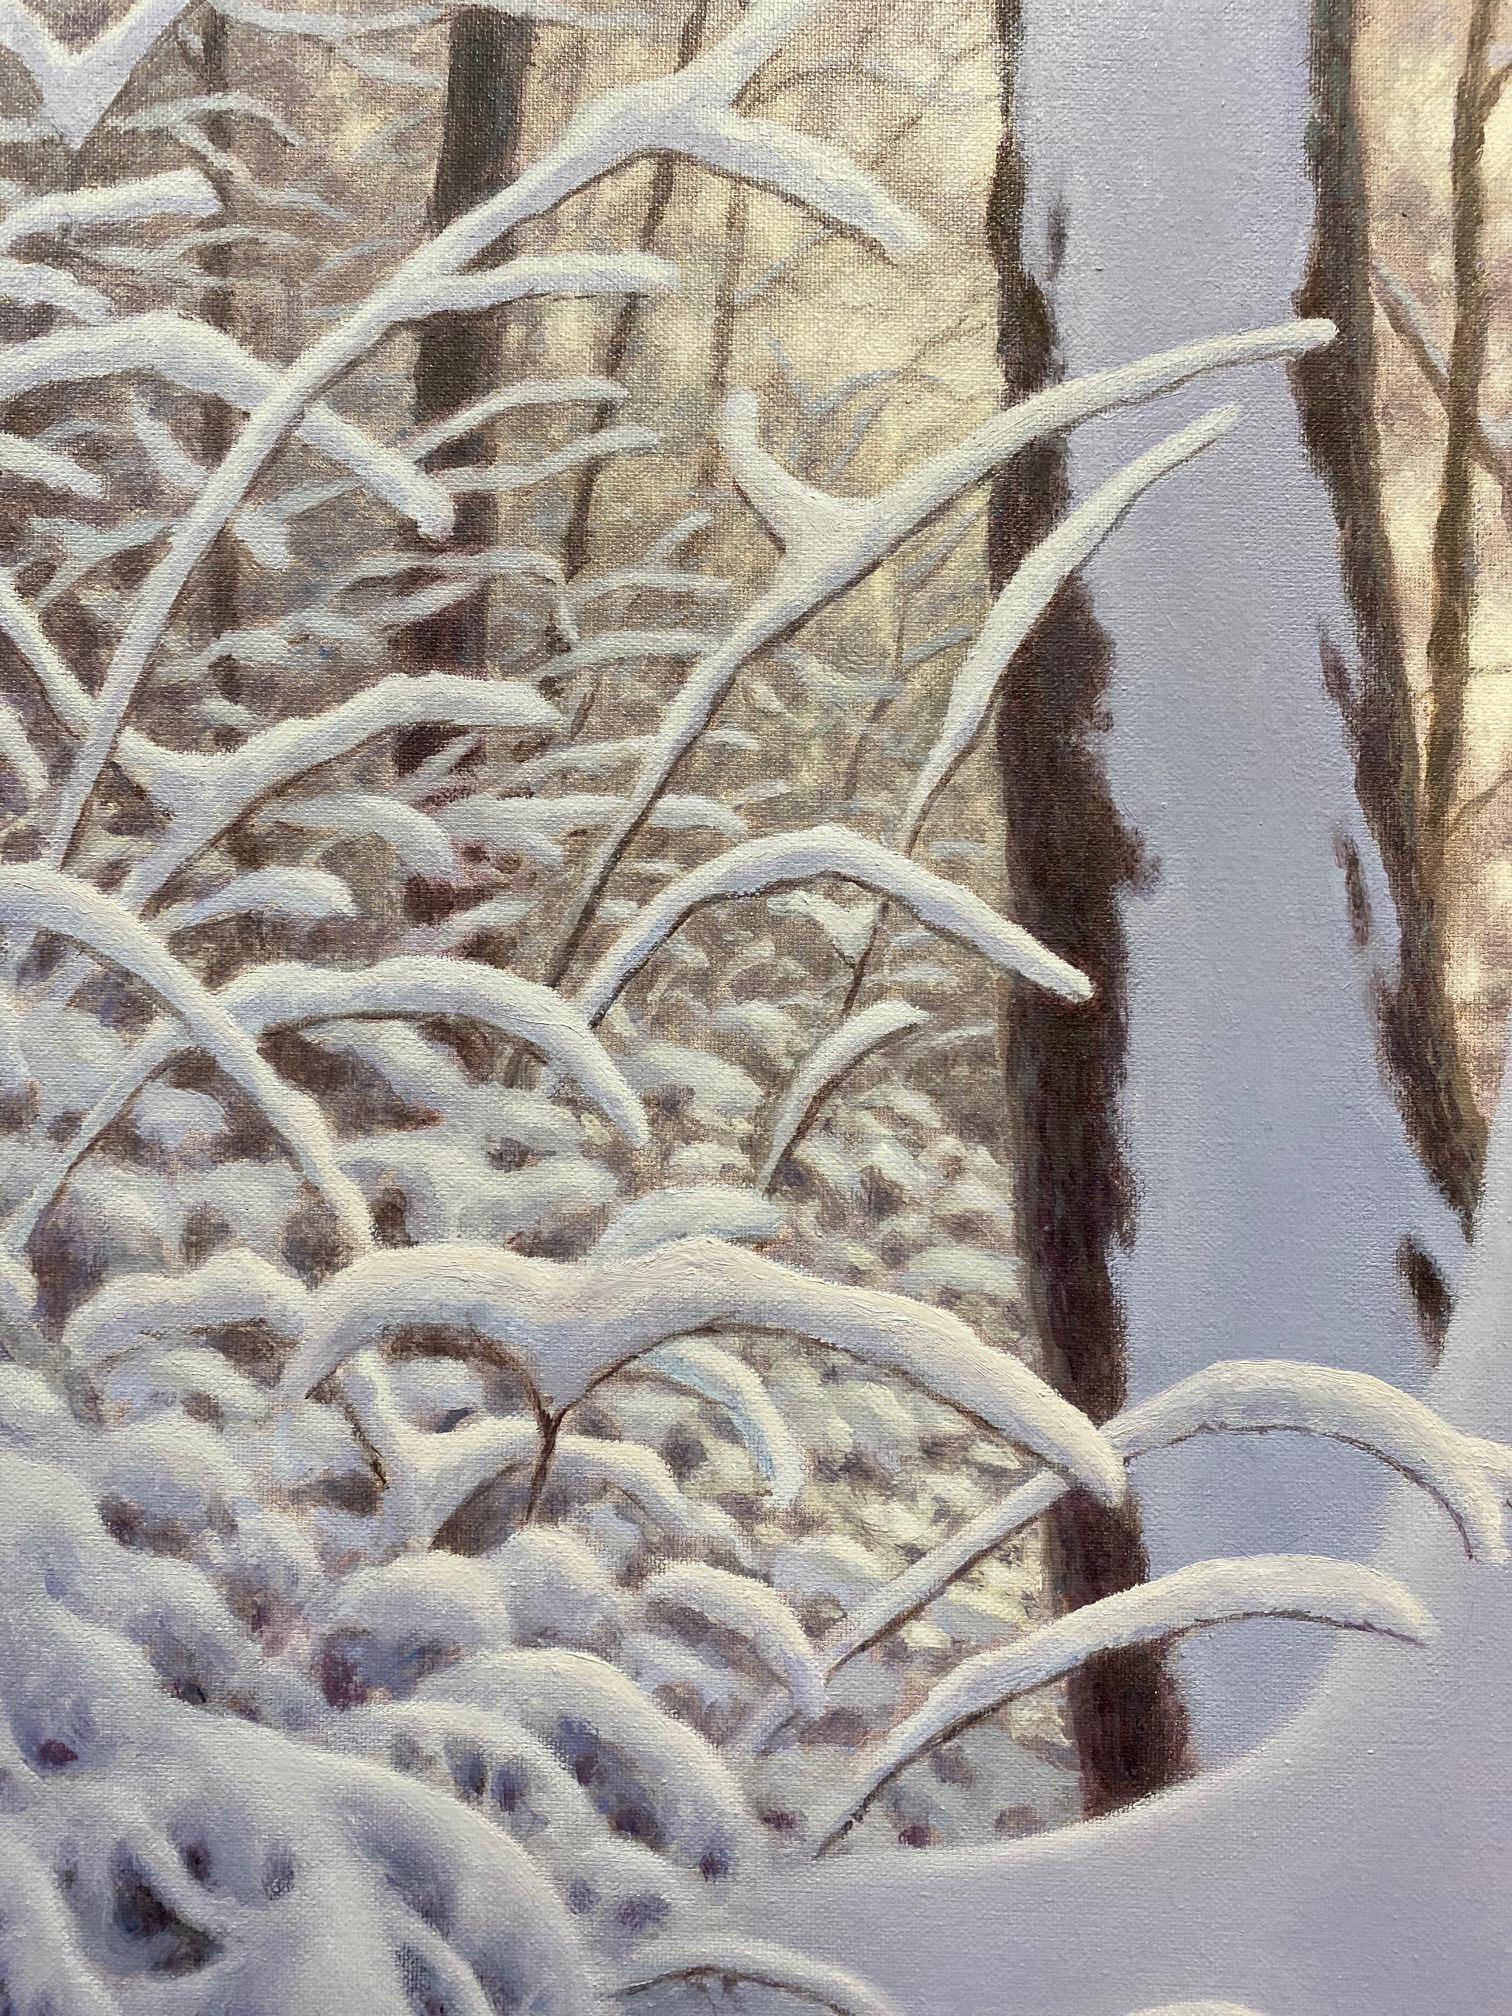 Winter Woods original  30x40 realistic winter landscape - Realist Painting by Barry DeBaun